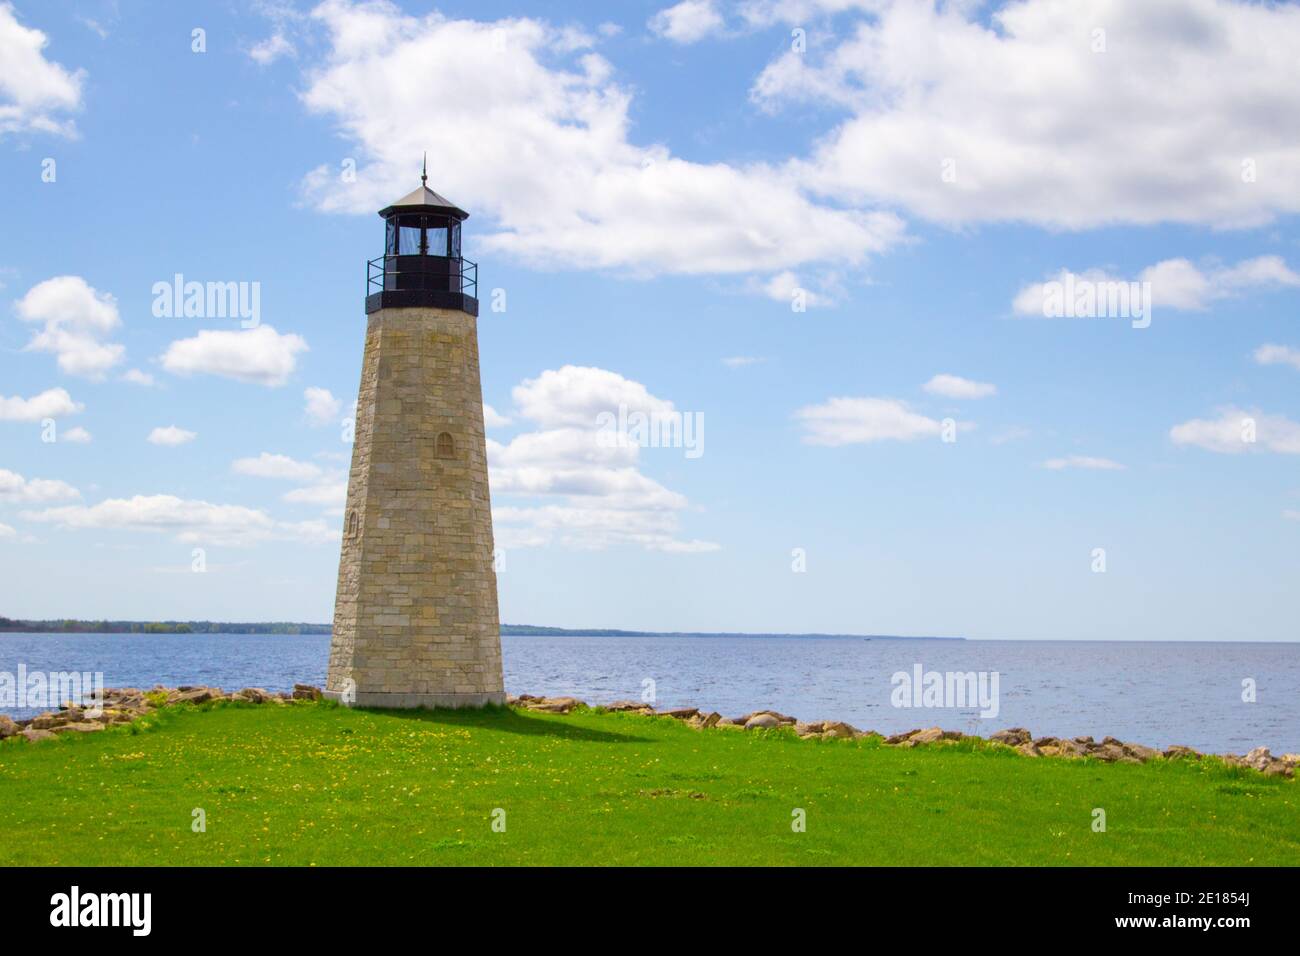 Lake Michigan Lighthouse. Lighthouse on the coast of Lake Michigan in Gladstone, Michigan. Stock Photo